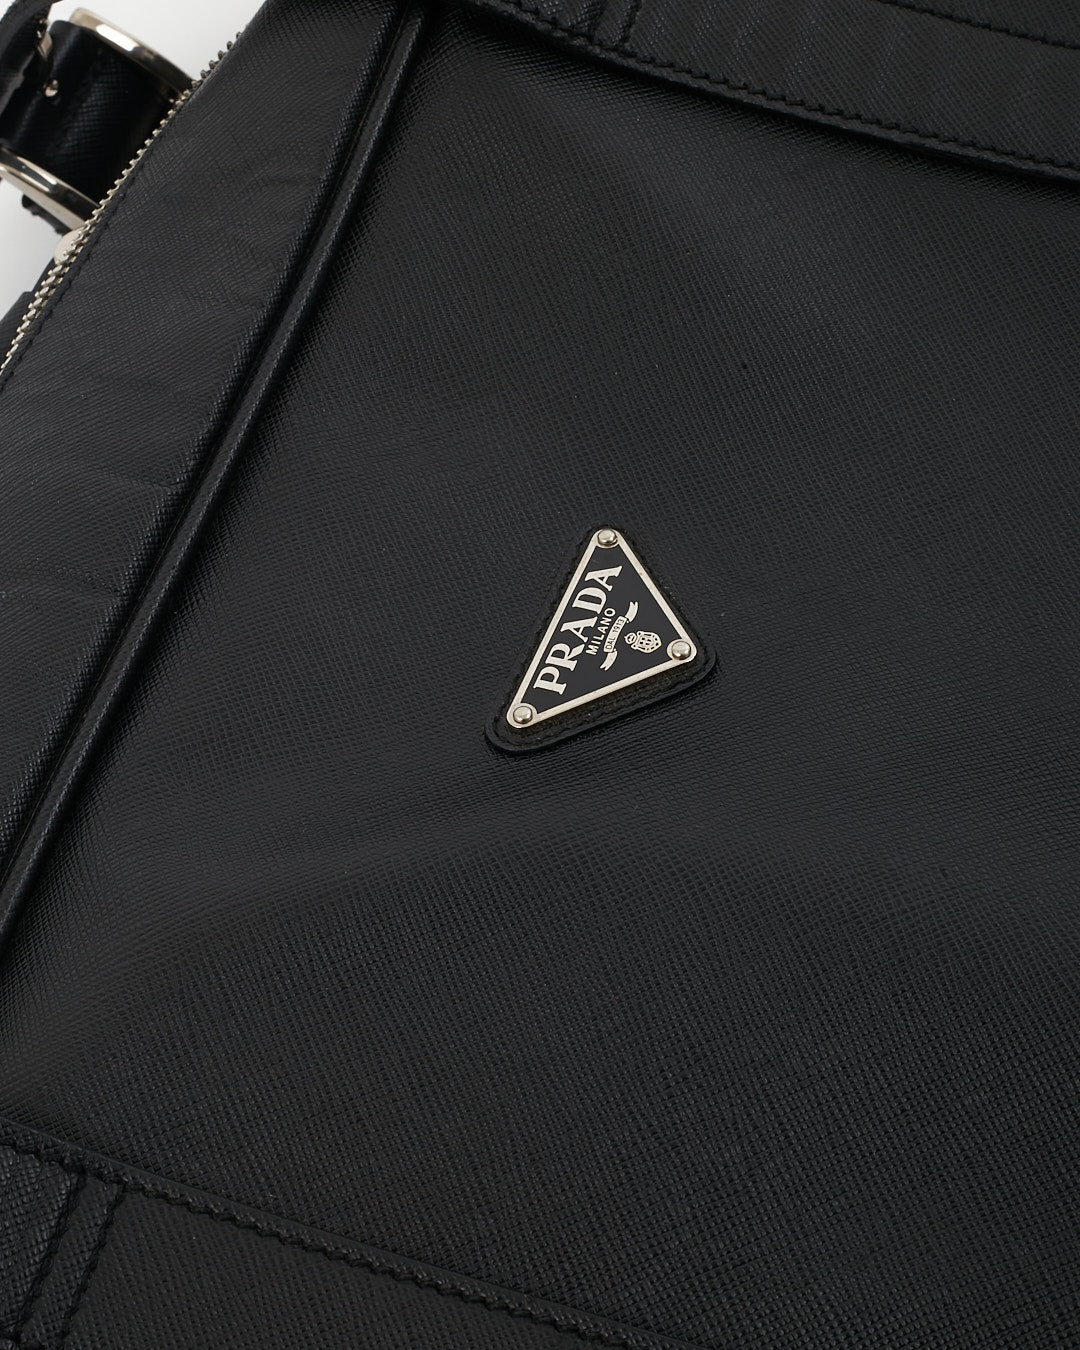 Prada Black Saffiano Leather Convertible Buckle Suitcase Travel Bag